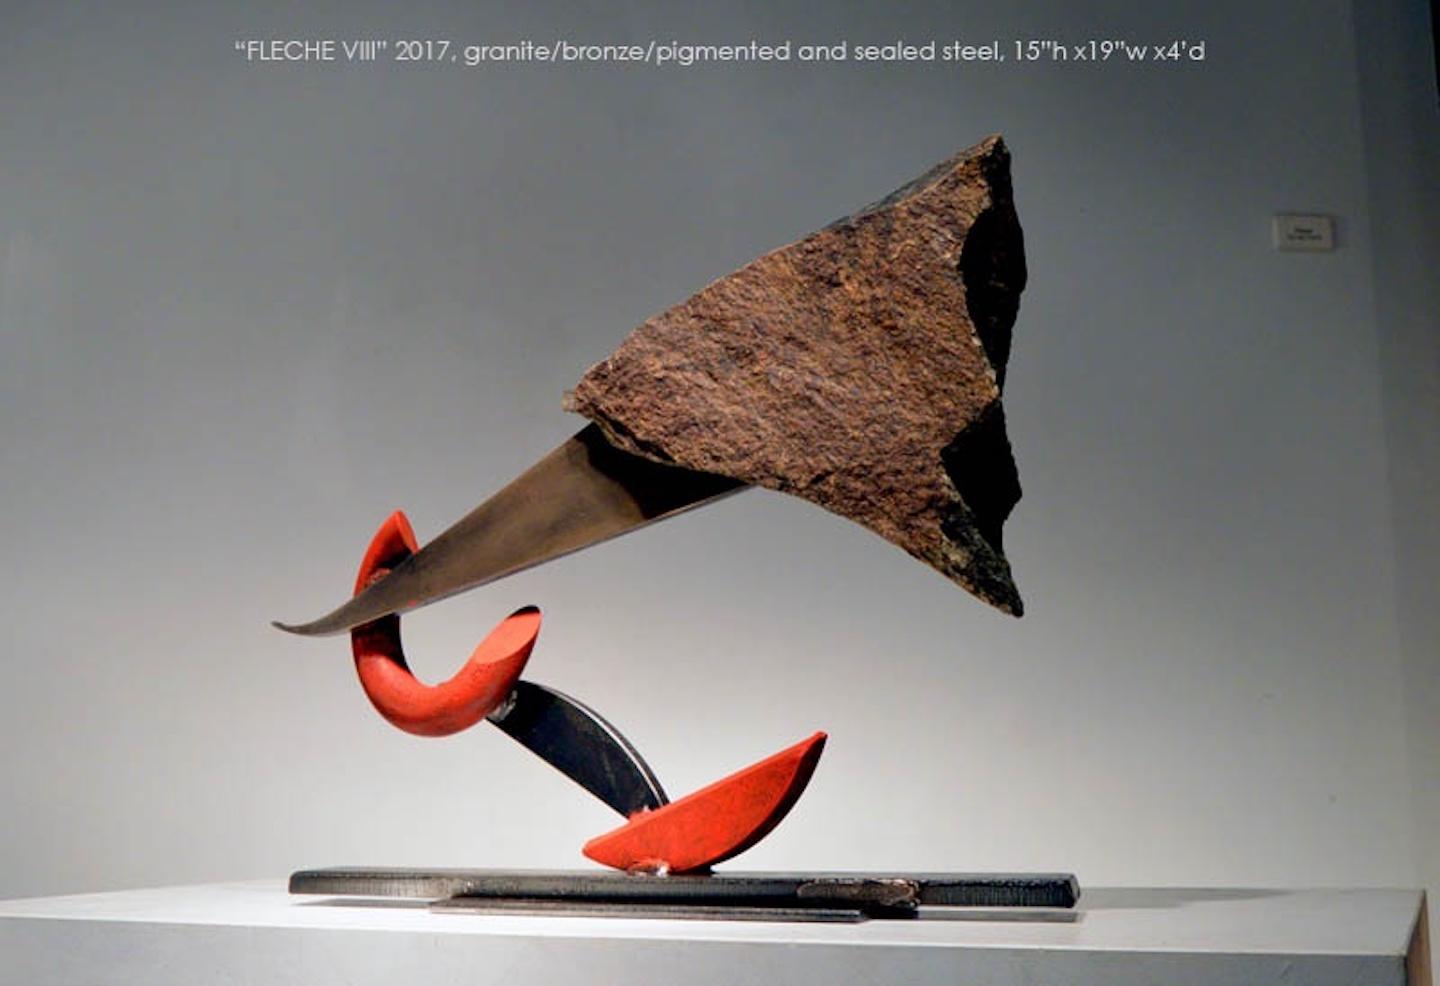 Fleche VIII - Abstract Geometric Sculpture by John Van Alstine